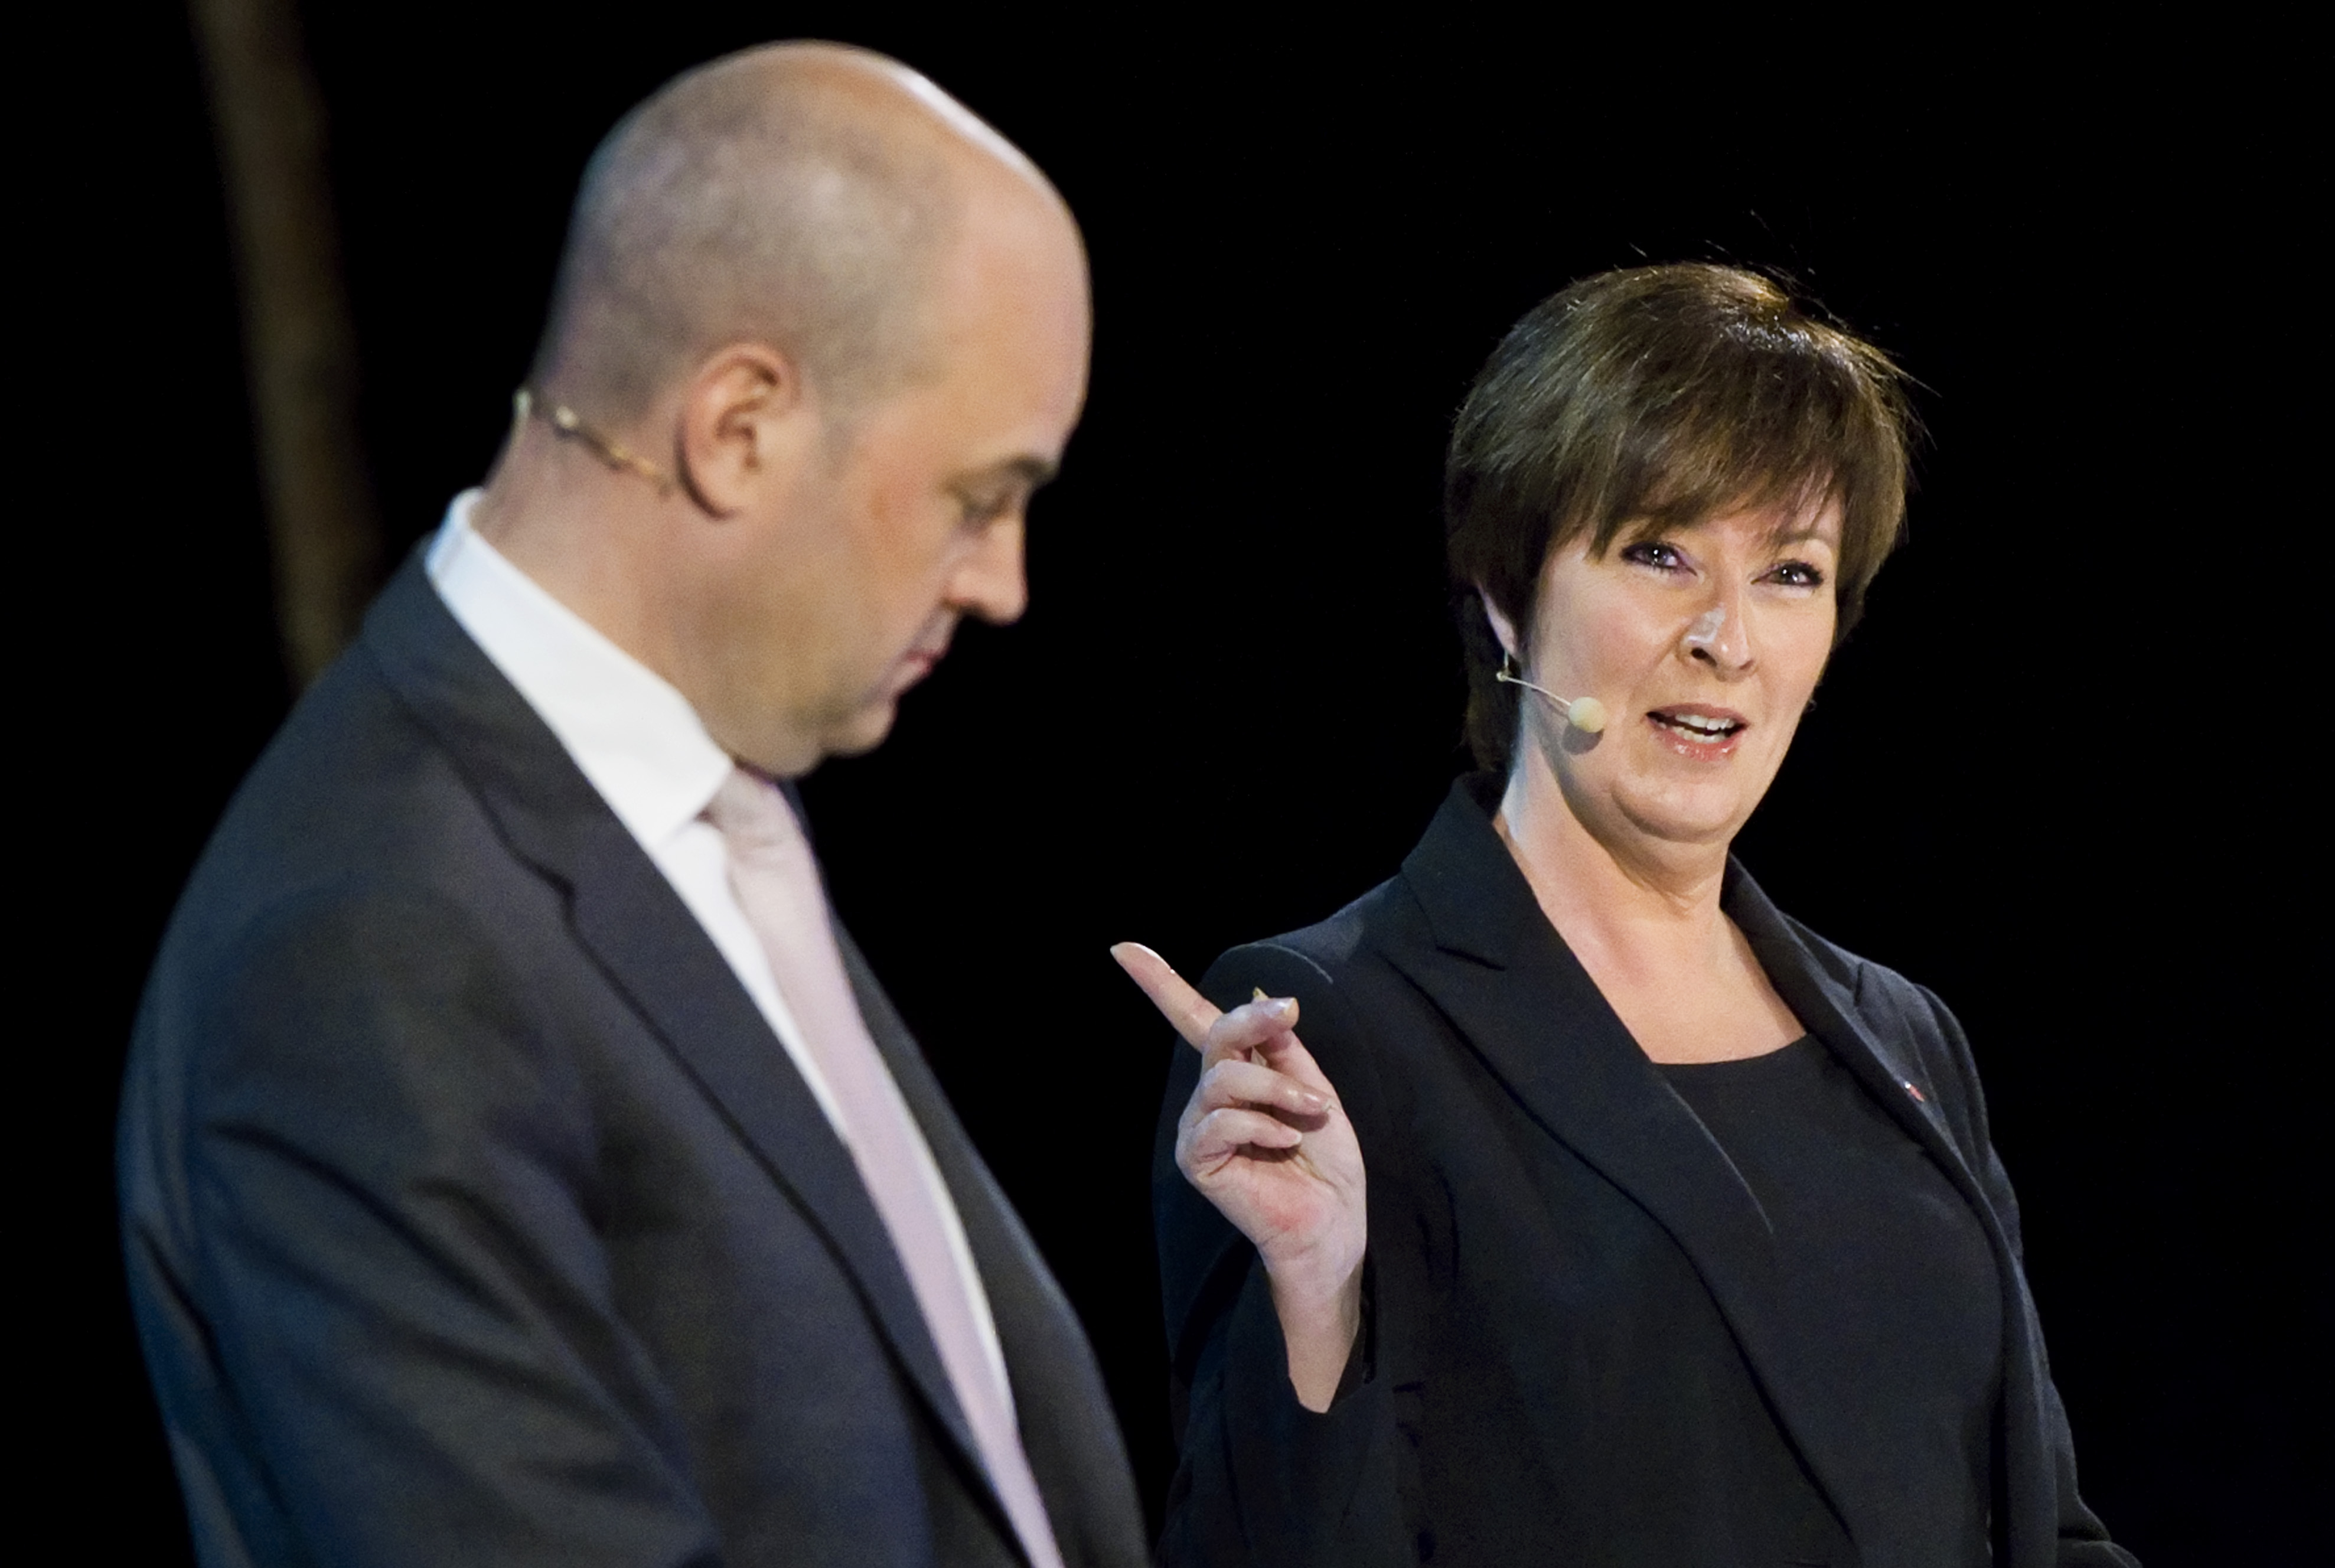 Riksdagsvalet 2010, Partiledardebatt, Mona Sahlin, Fredrik Reinfeldt